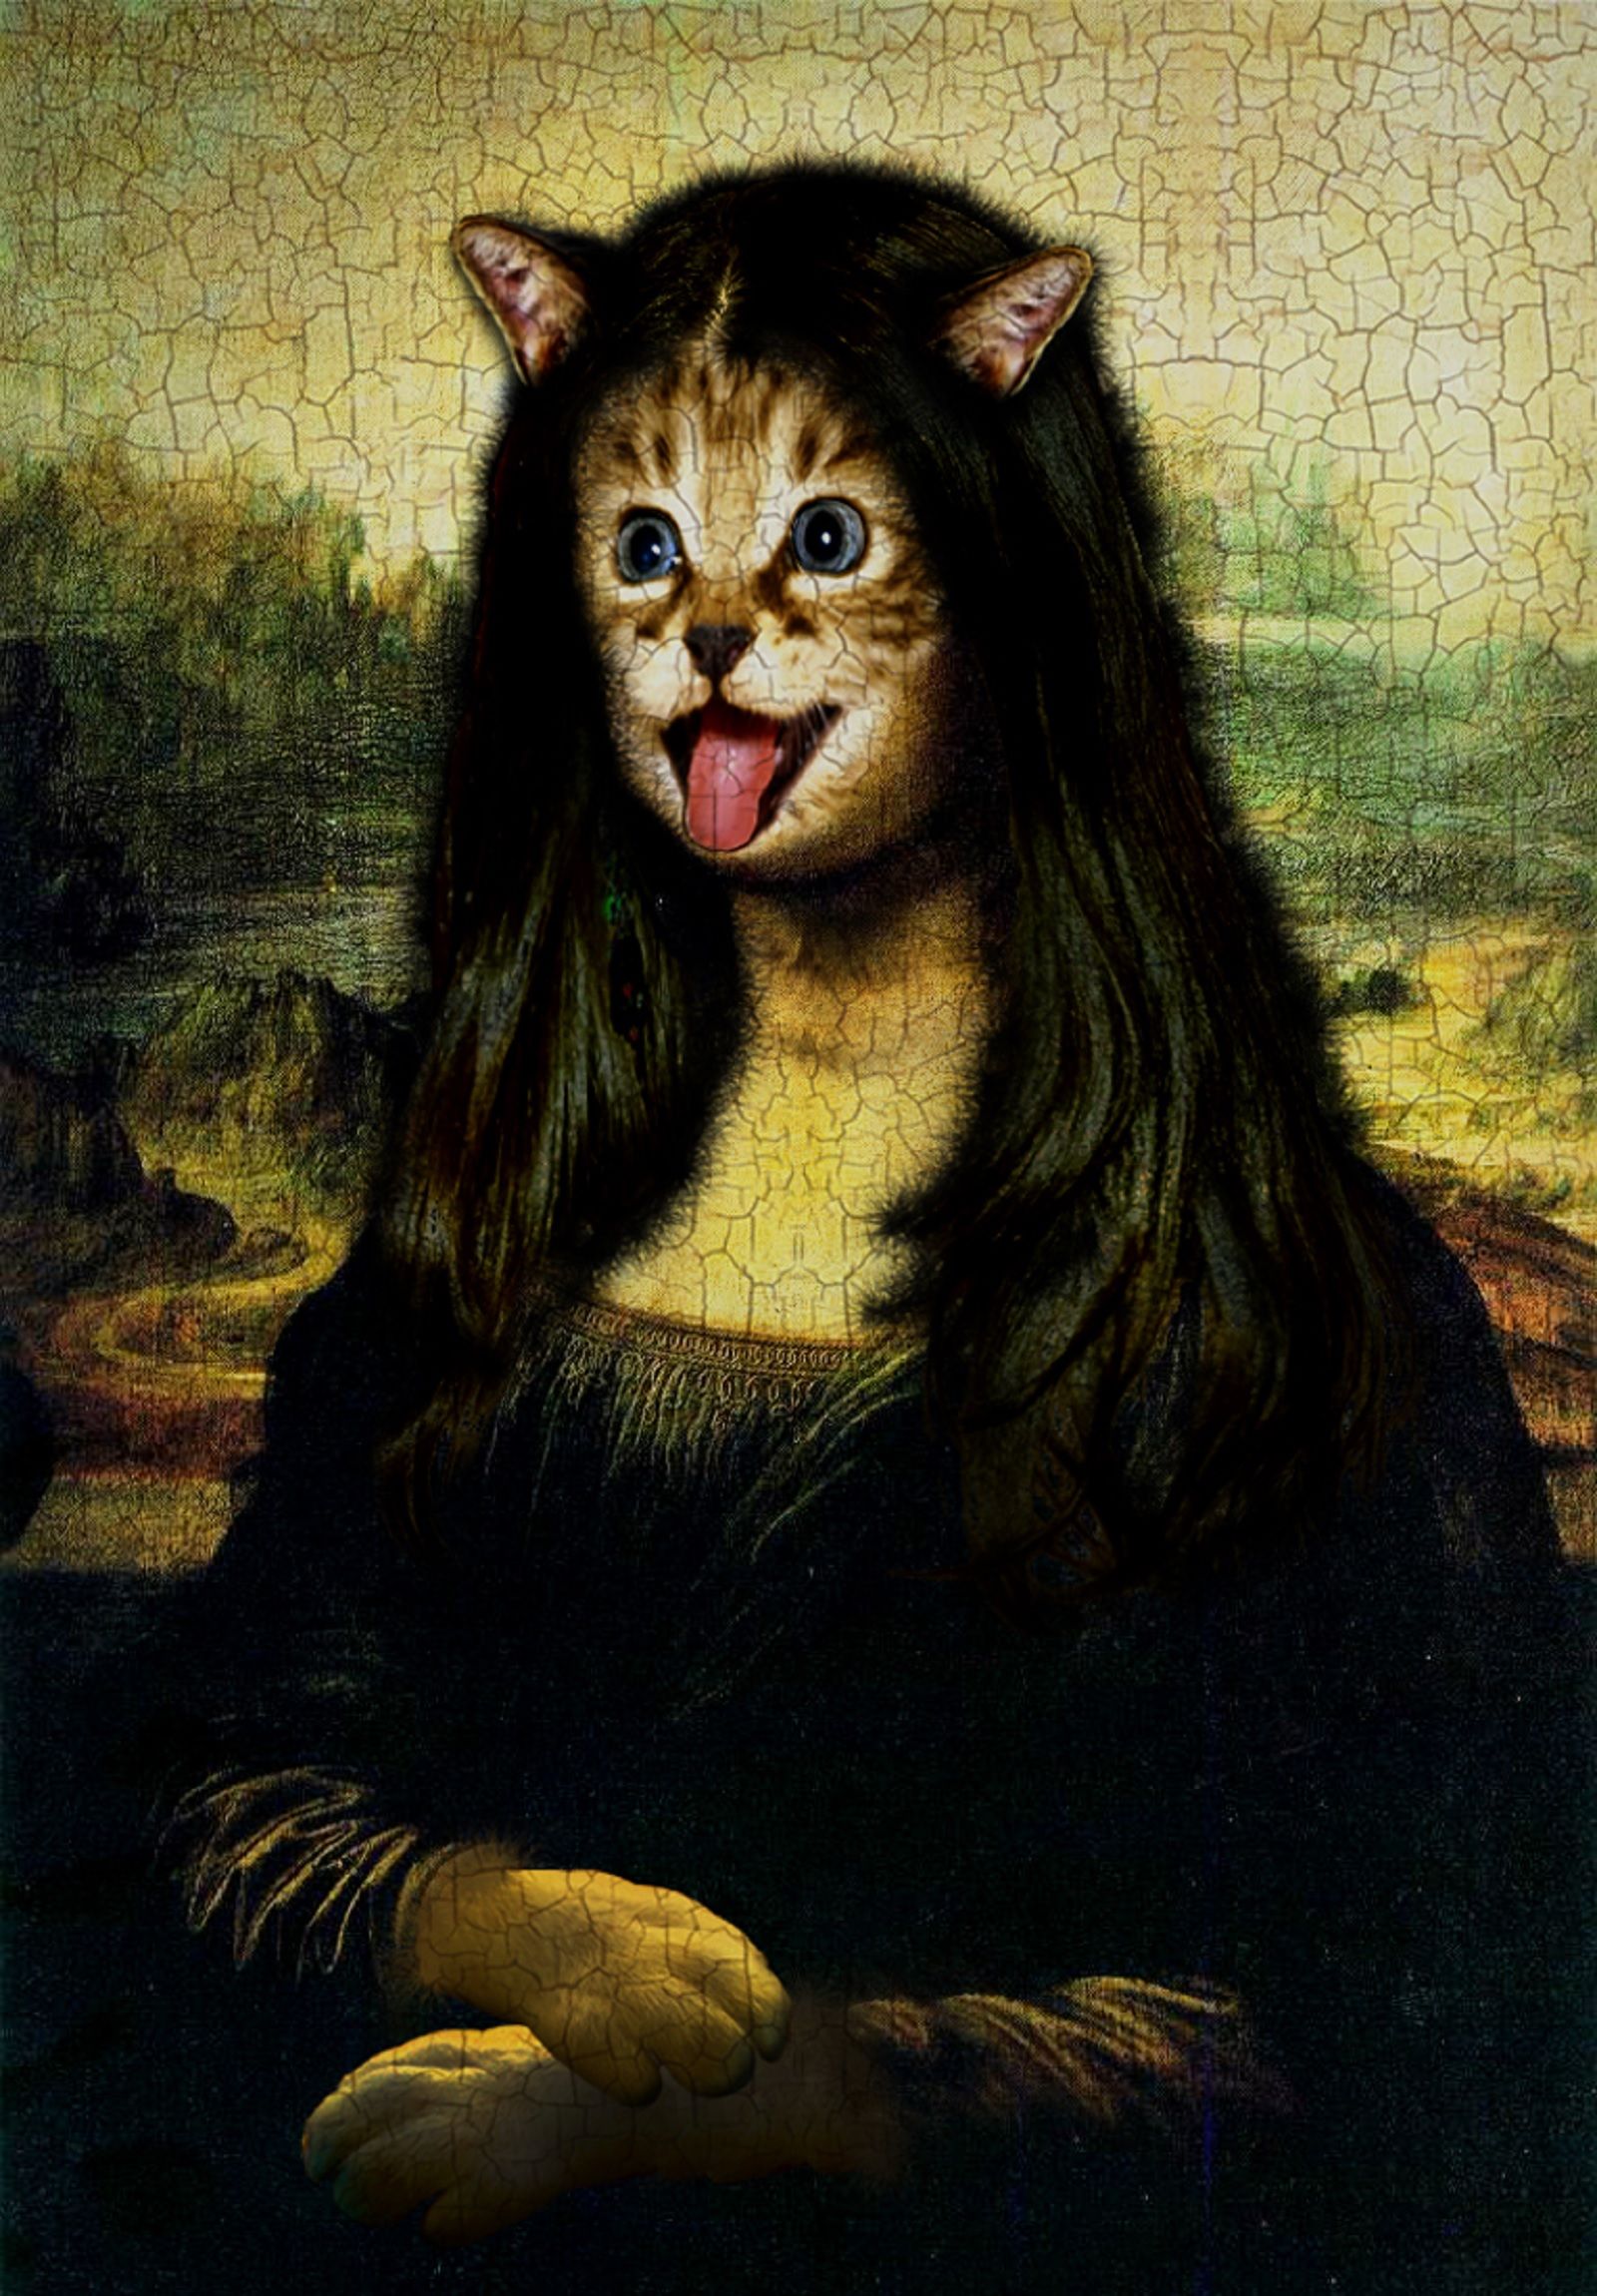 Amusing Images Of Animals Photoshopped Into Renaissance Paintings image 15